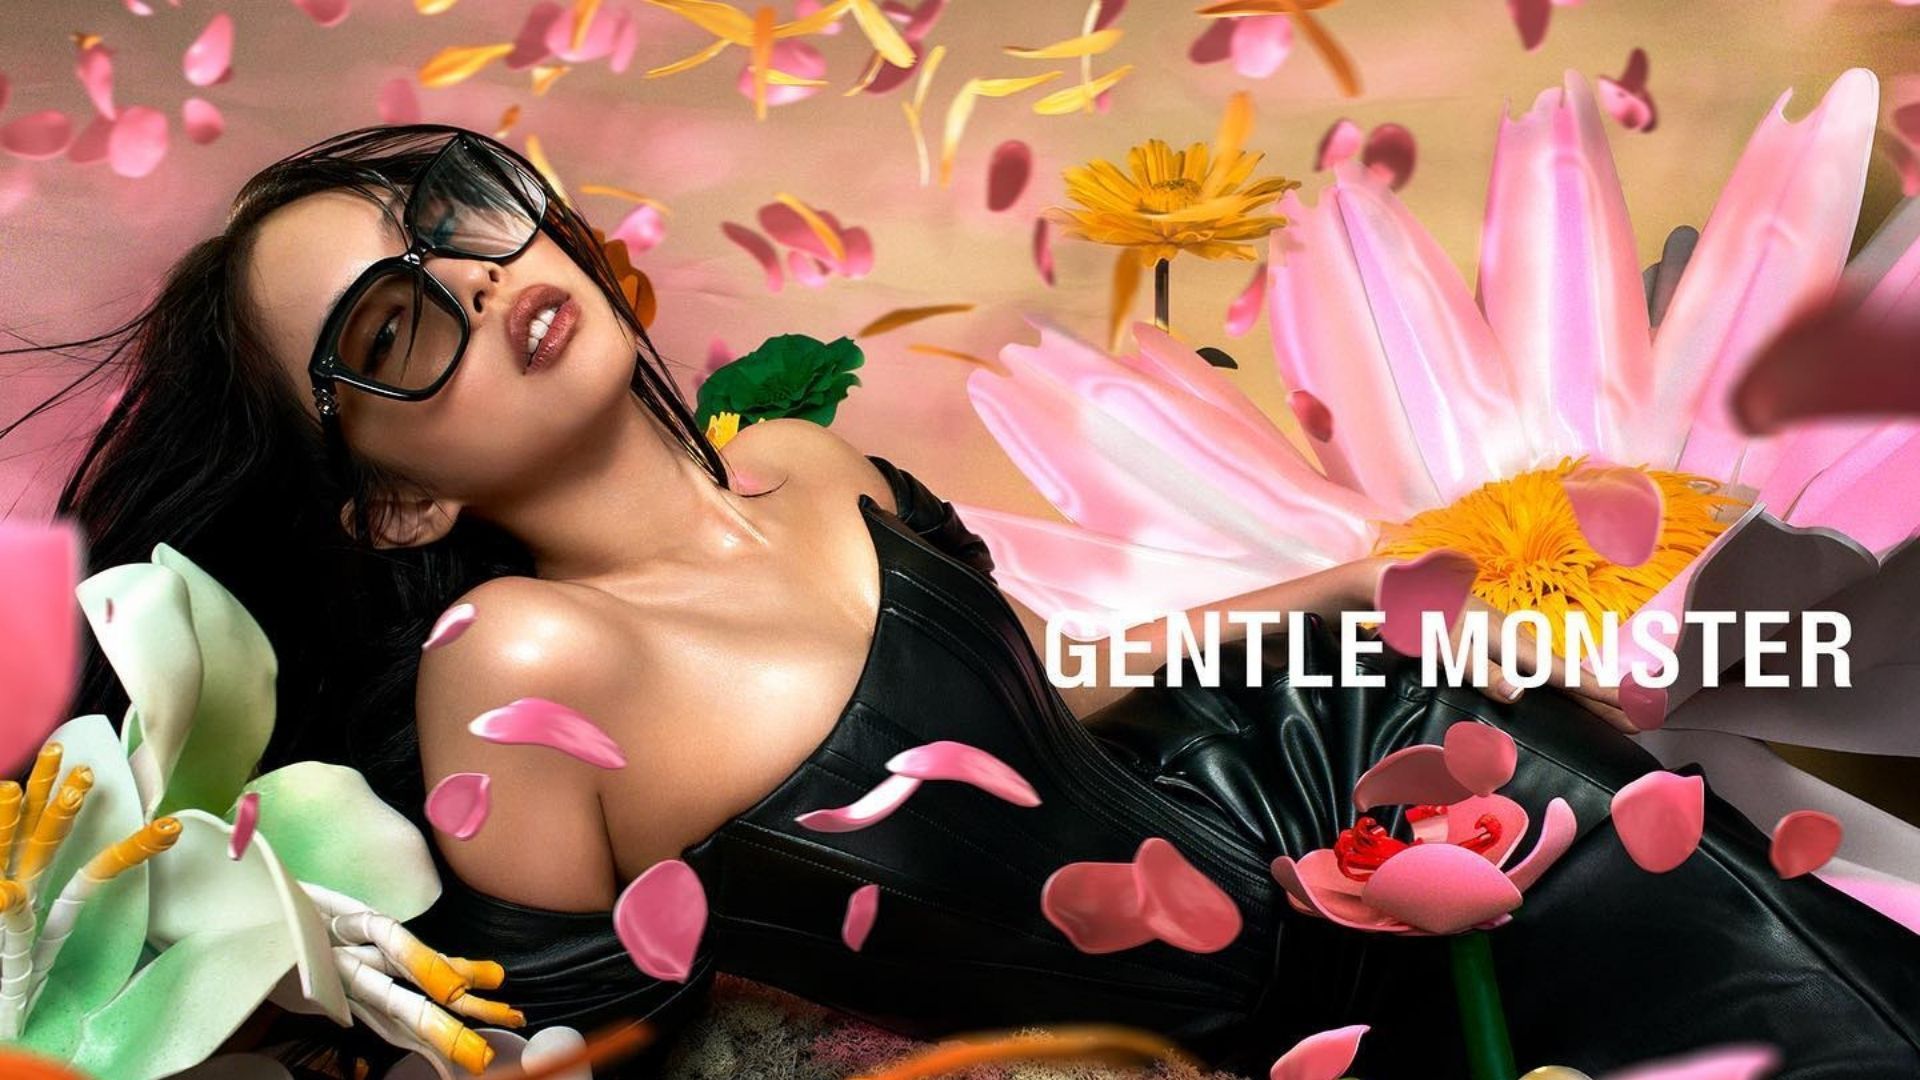 JENTLE GARDEN: GENTLE MONSTER X JENNIE Mobile Game